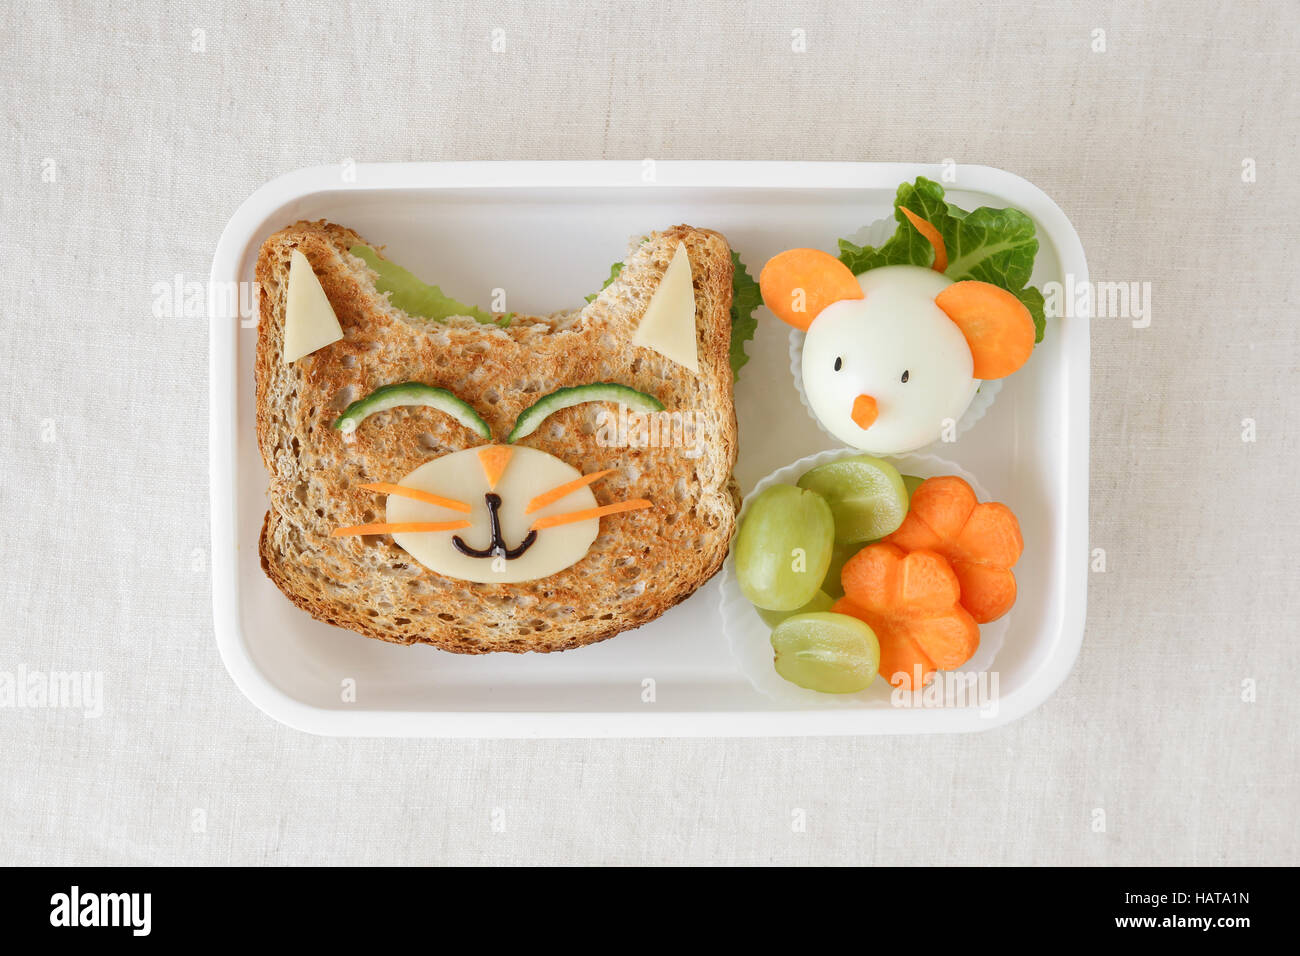 Kids lunch box fotografías e imágenes de alta resolución - Alamy